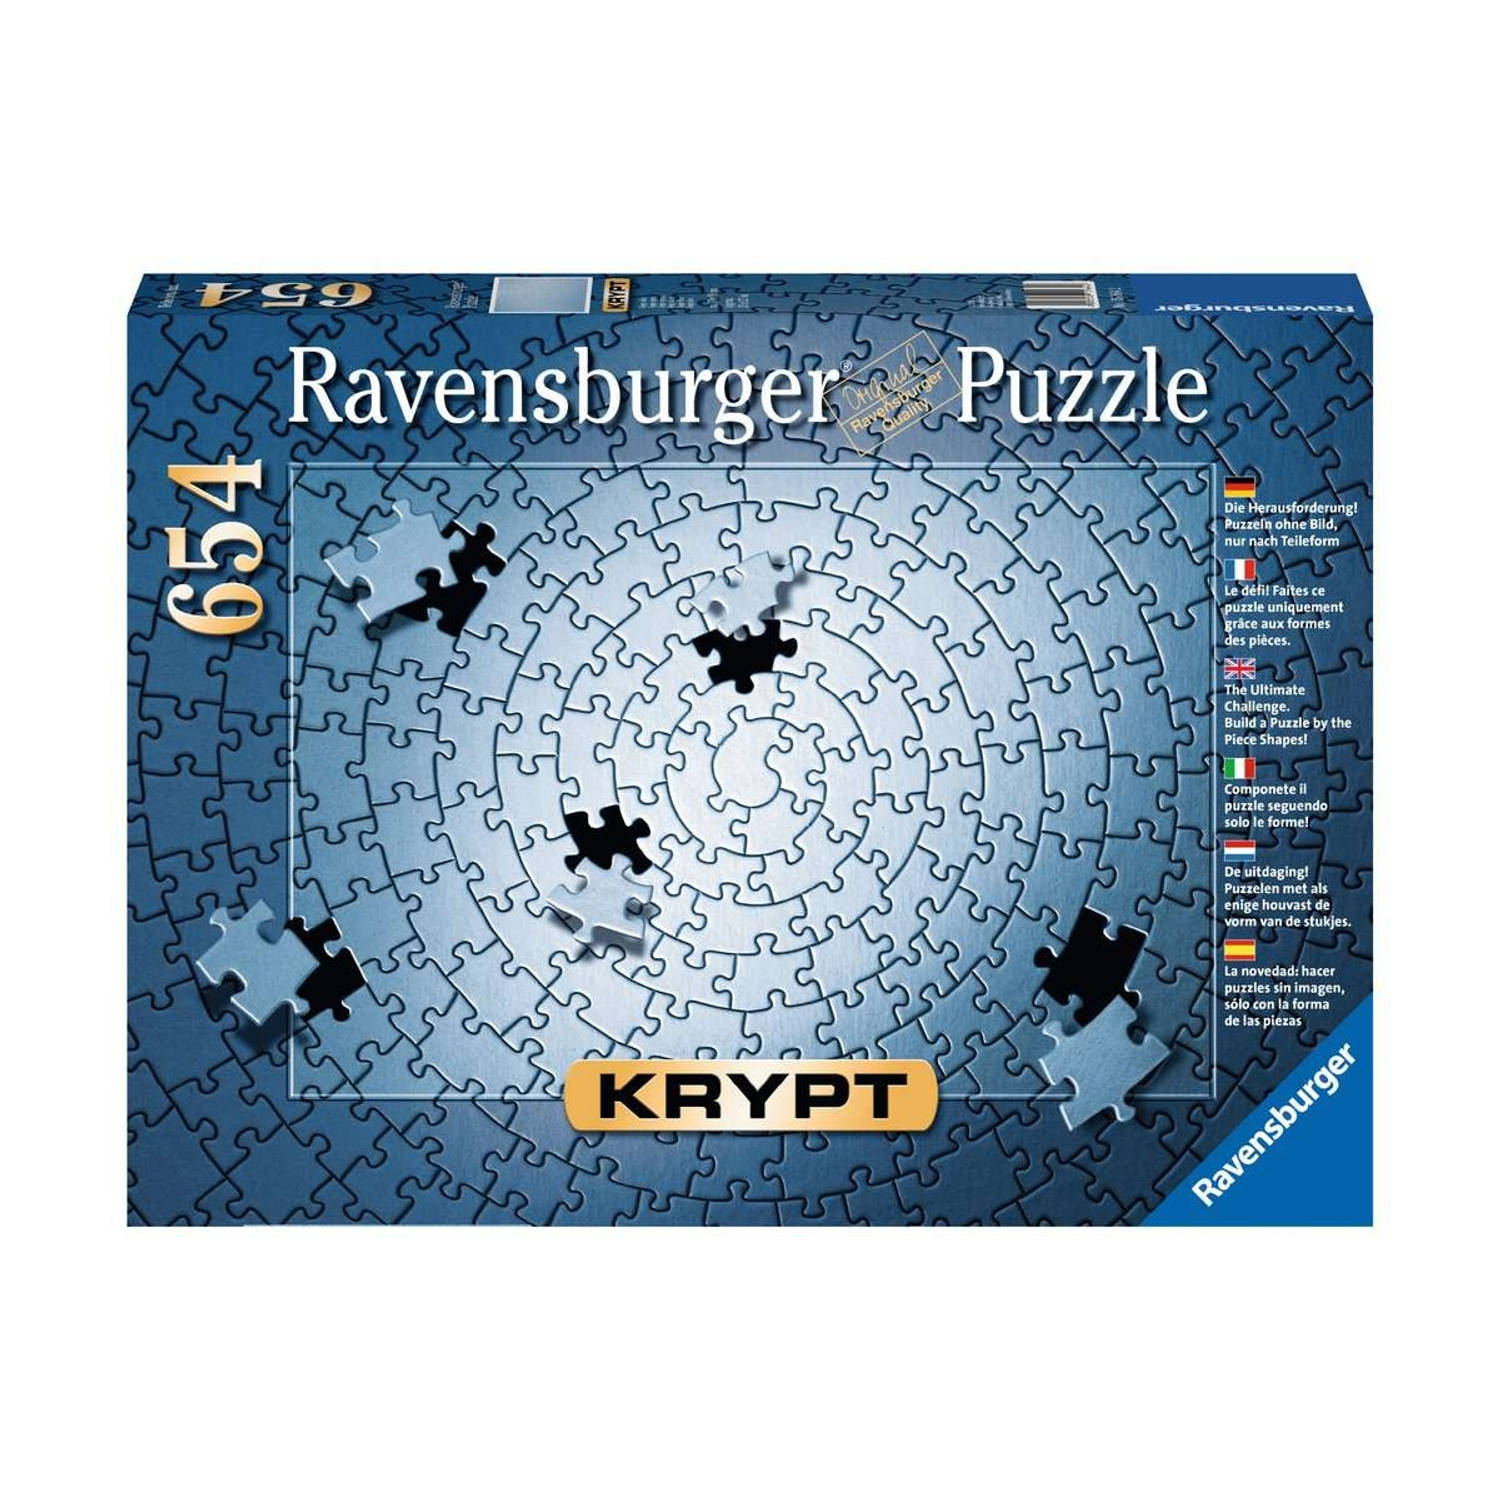 Ravensburger puzzel krypt silver